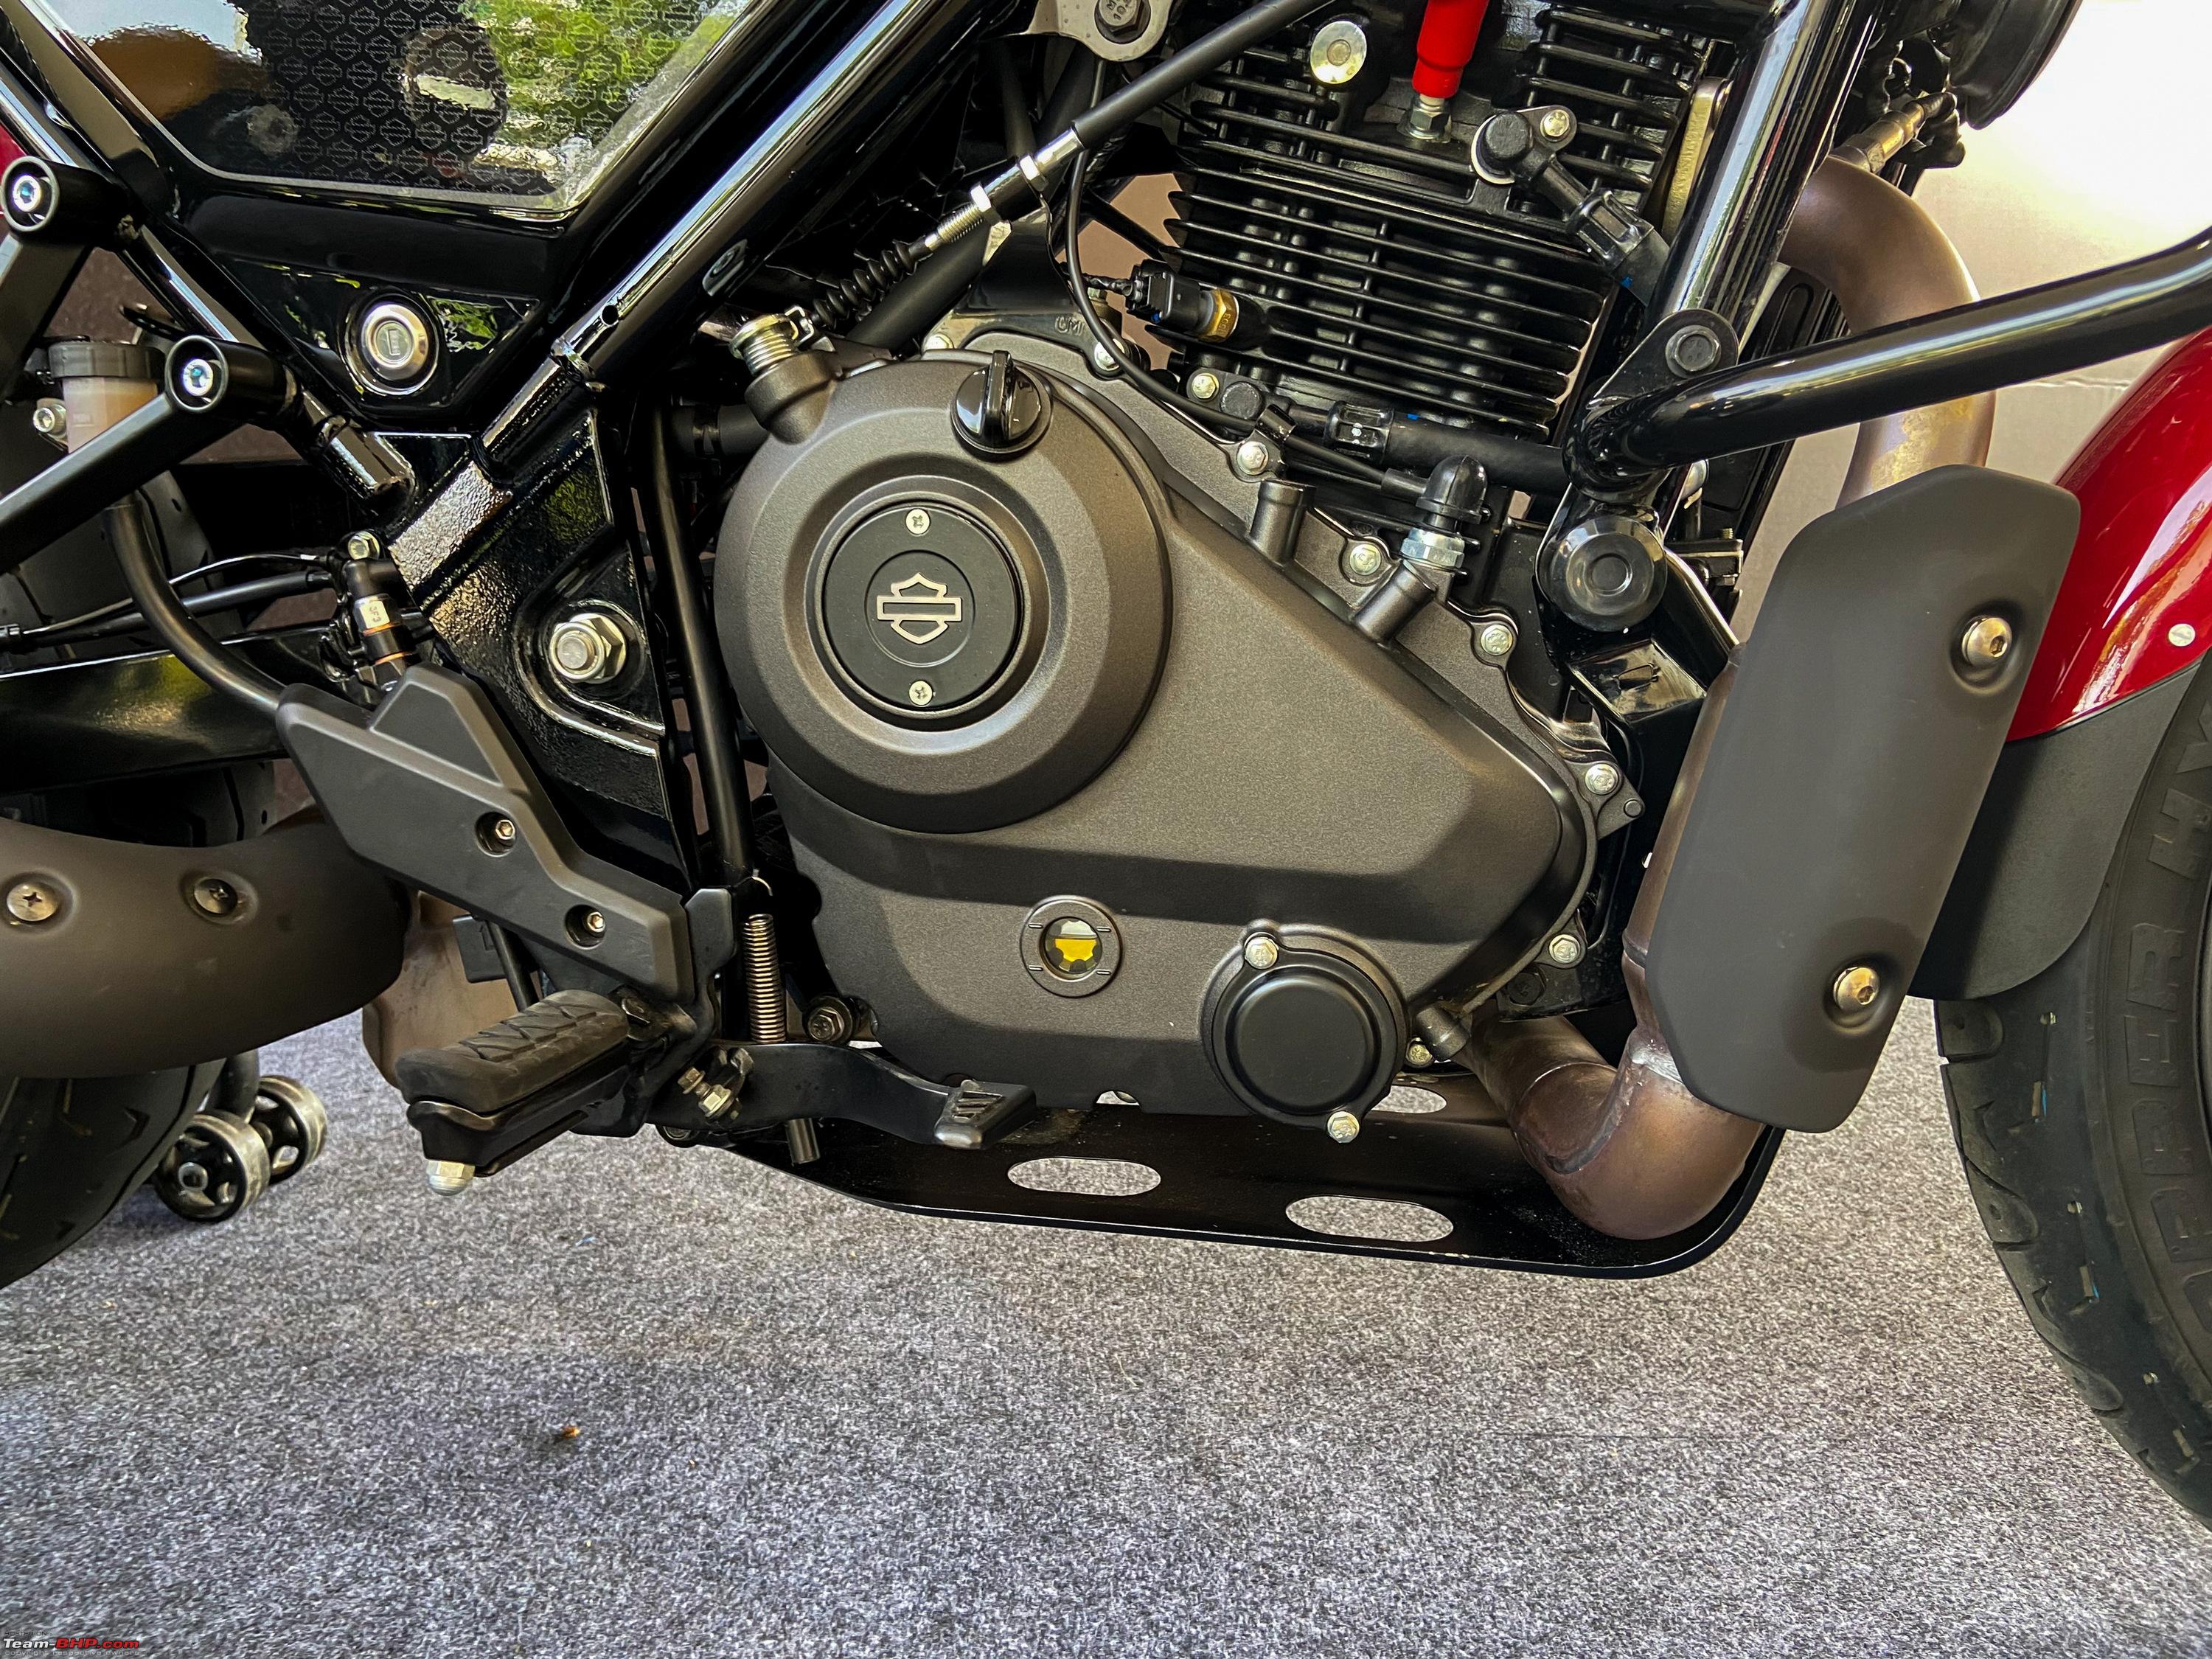 Harley-Davidson X440 Review - Team-BHP